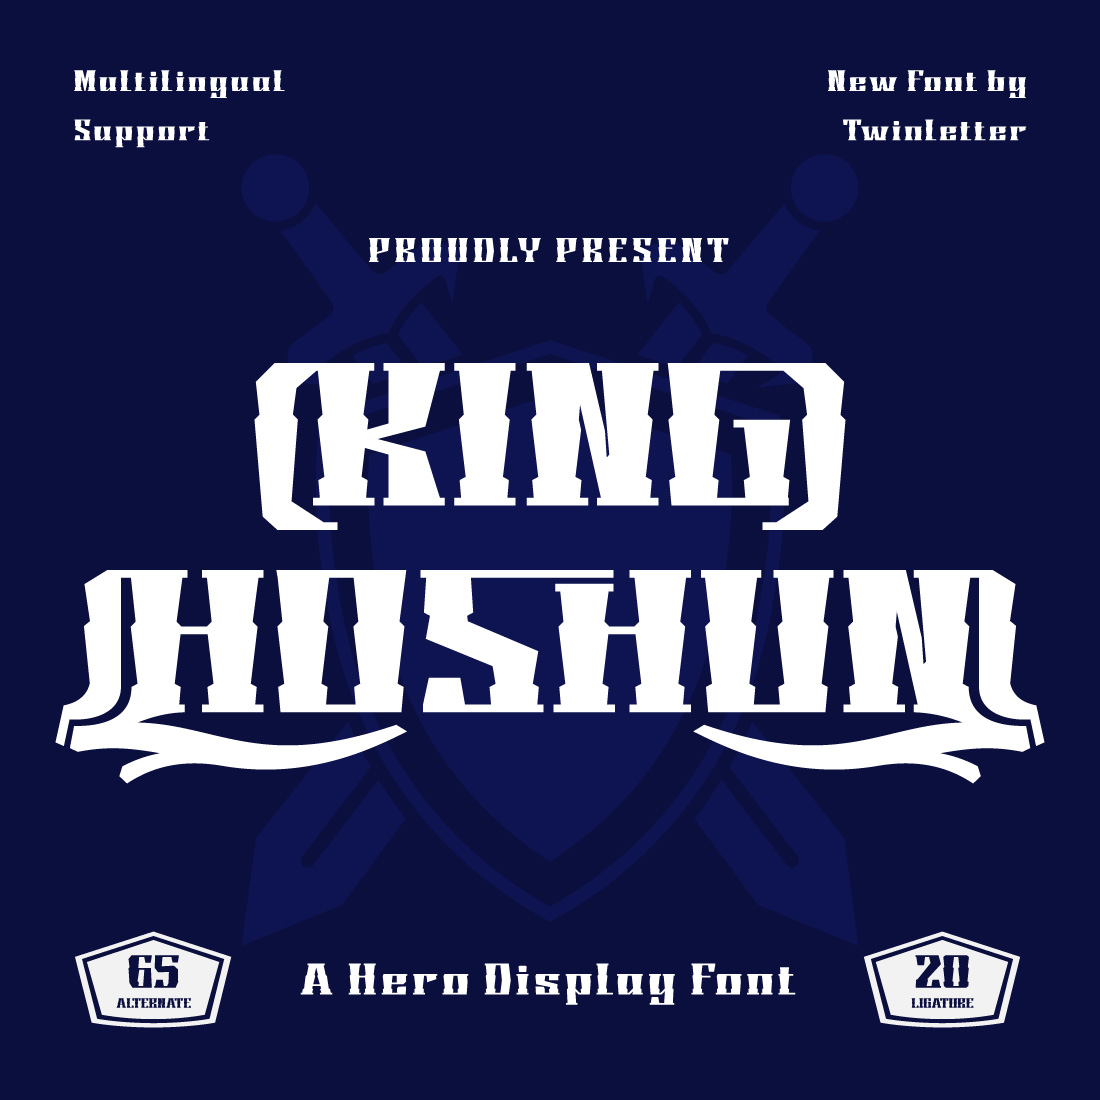 KING HOSHUN | Display Hero Font cover image.